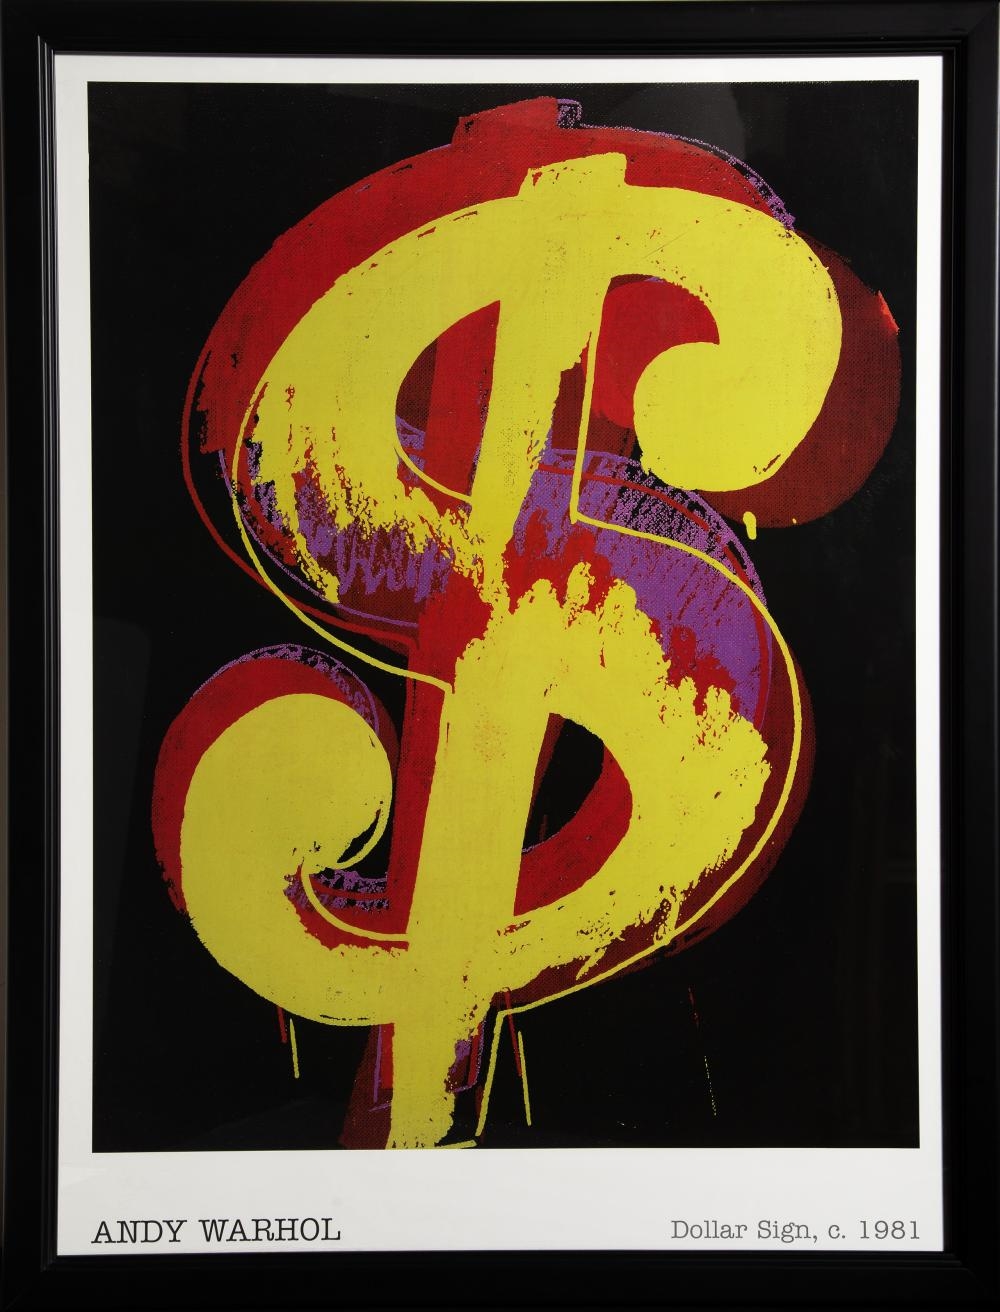 DOLLAR SIGN 1981 - Andy Warhol